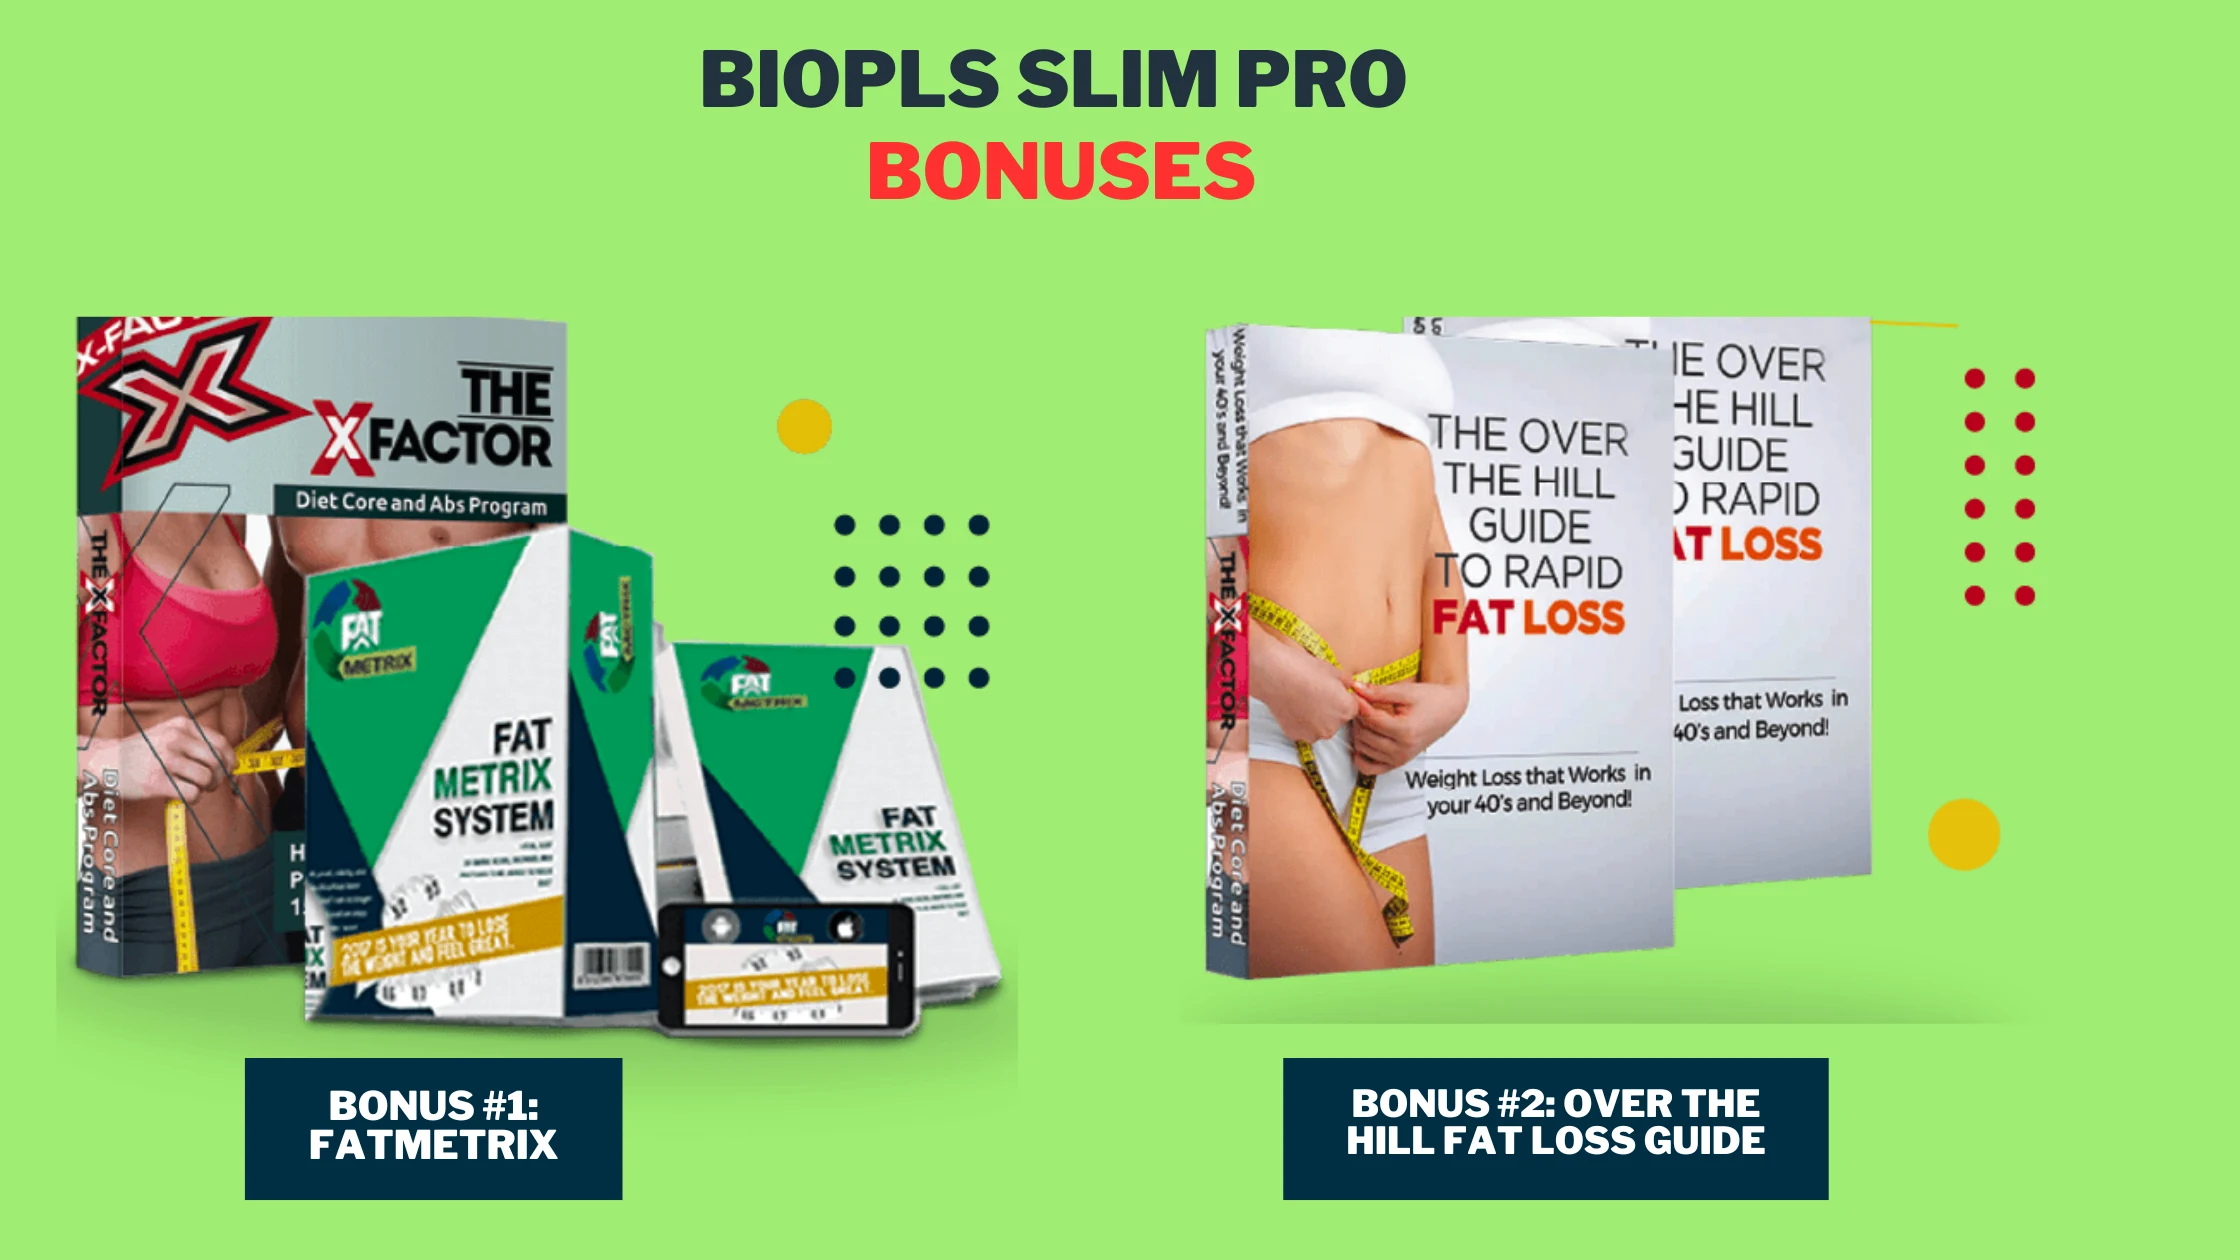 BioPls Slim Pro bonuses